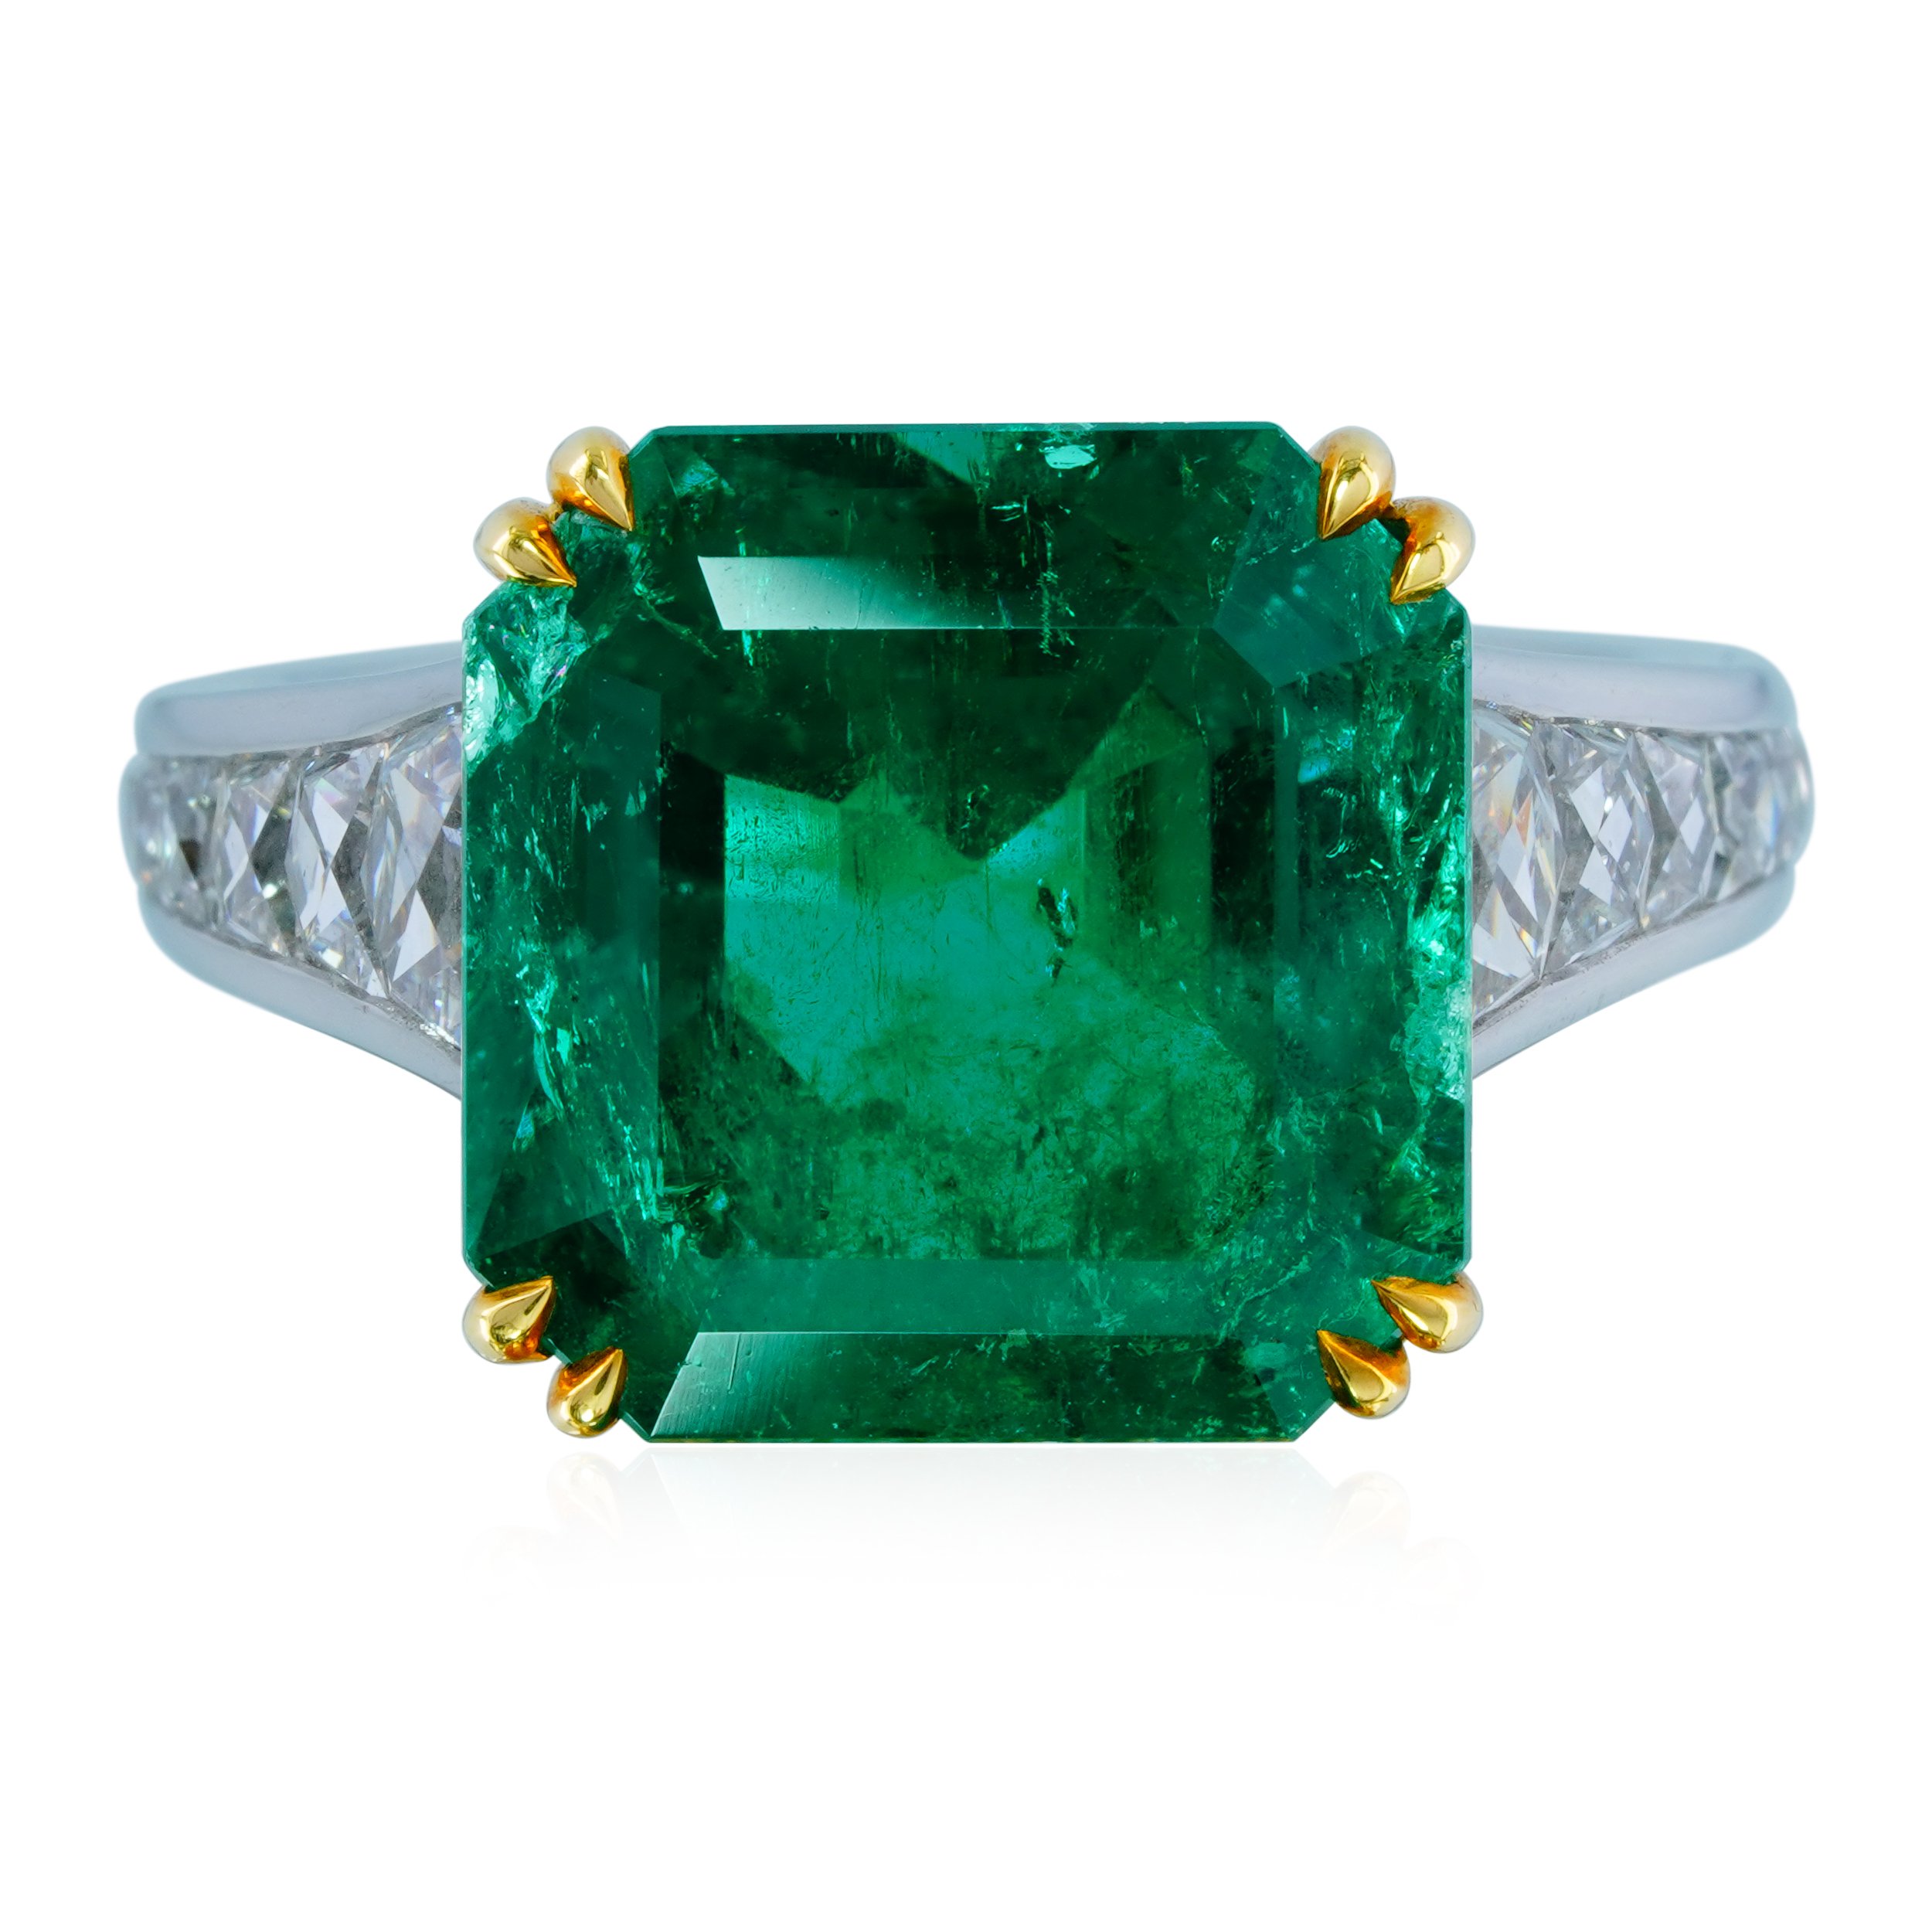 IVY New York x Gemfields 7.43 ct Emerald and Diamond Ring.jpg